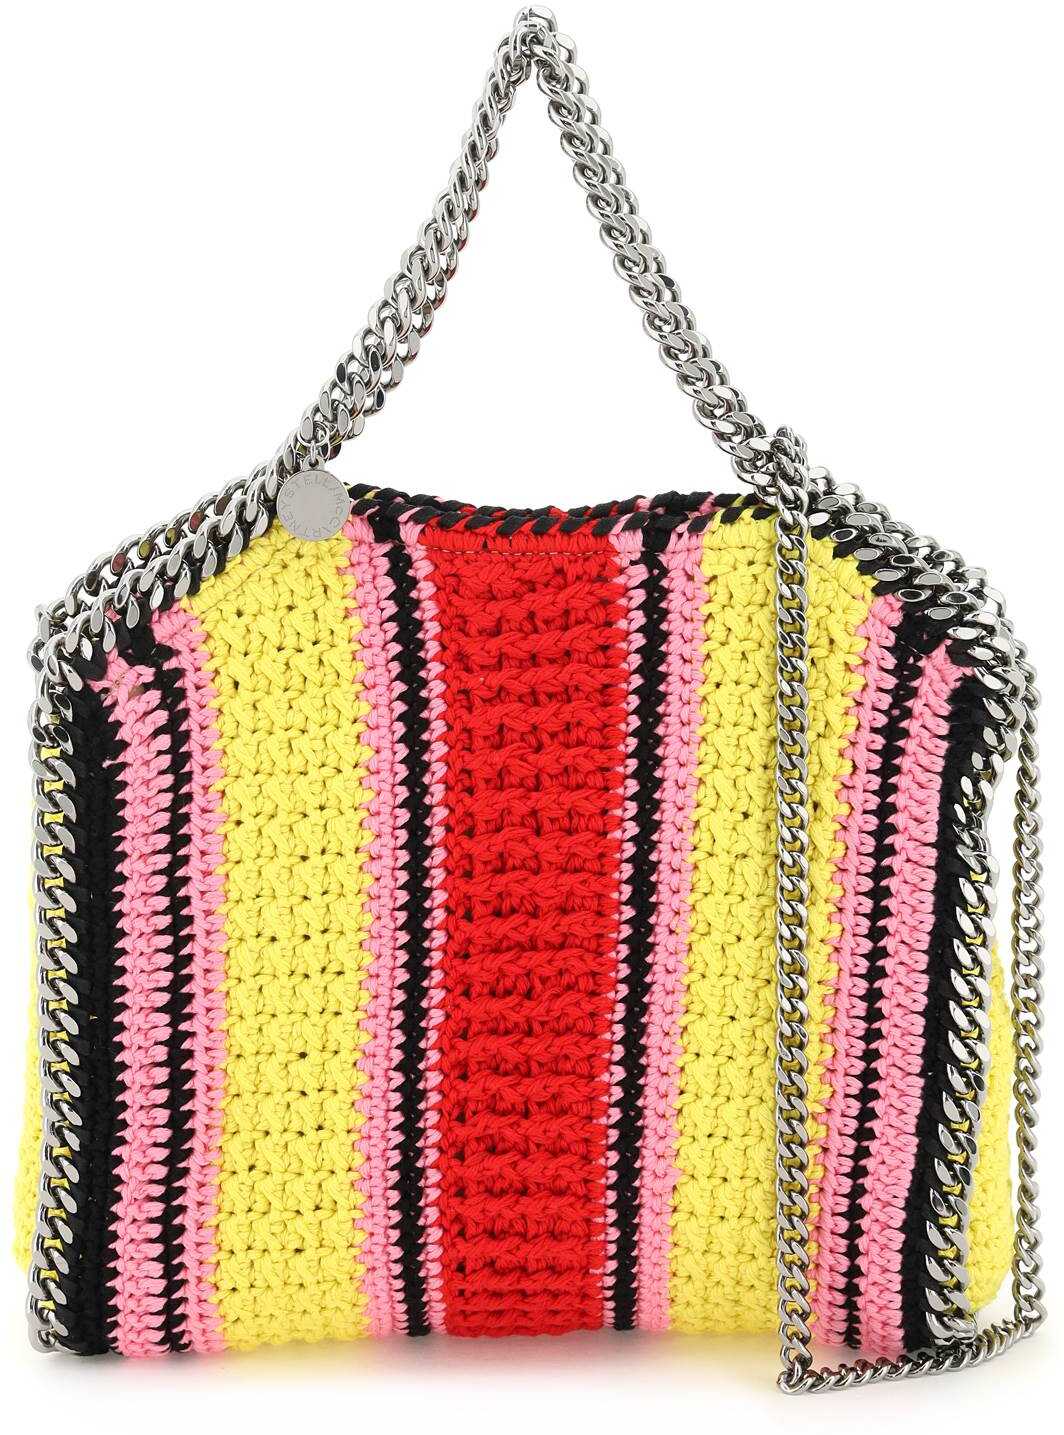 Stella McCartney \'Falabella\' Crochet Tote Bag PINK